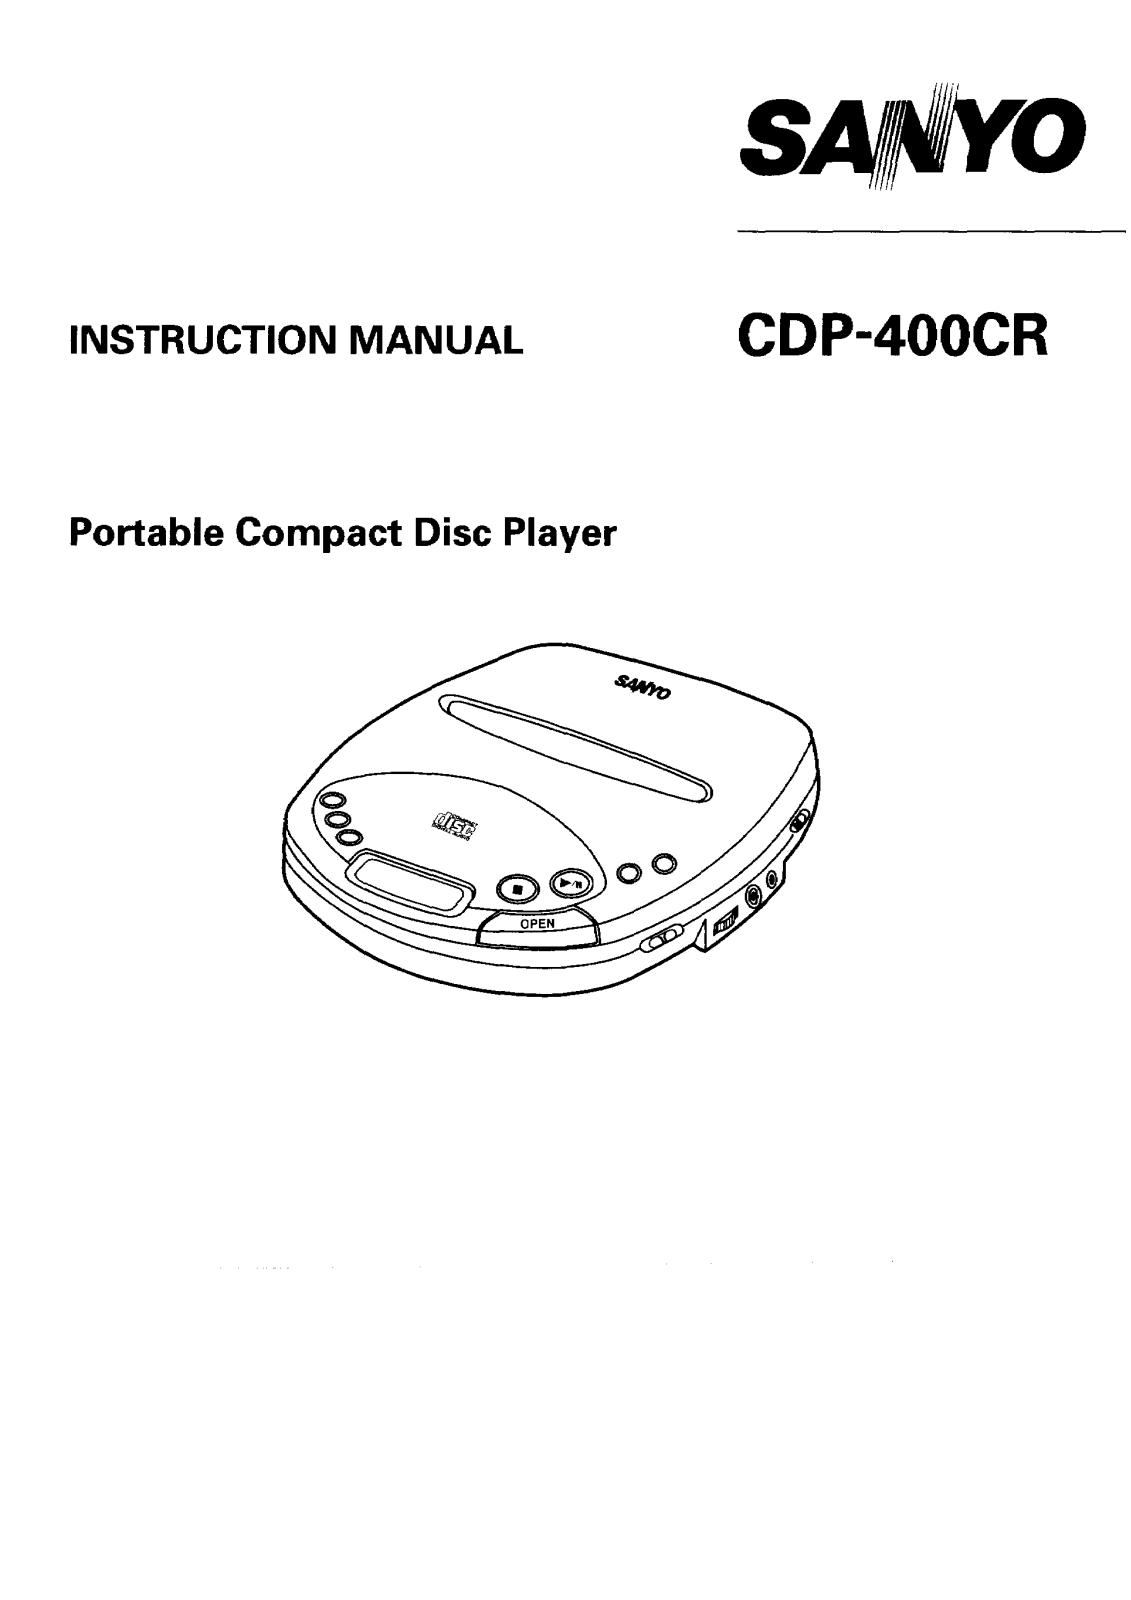 Sanyo CDP-400CR Instruction Manual